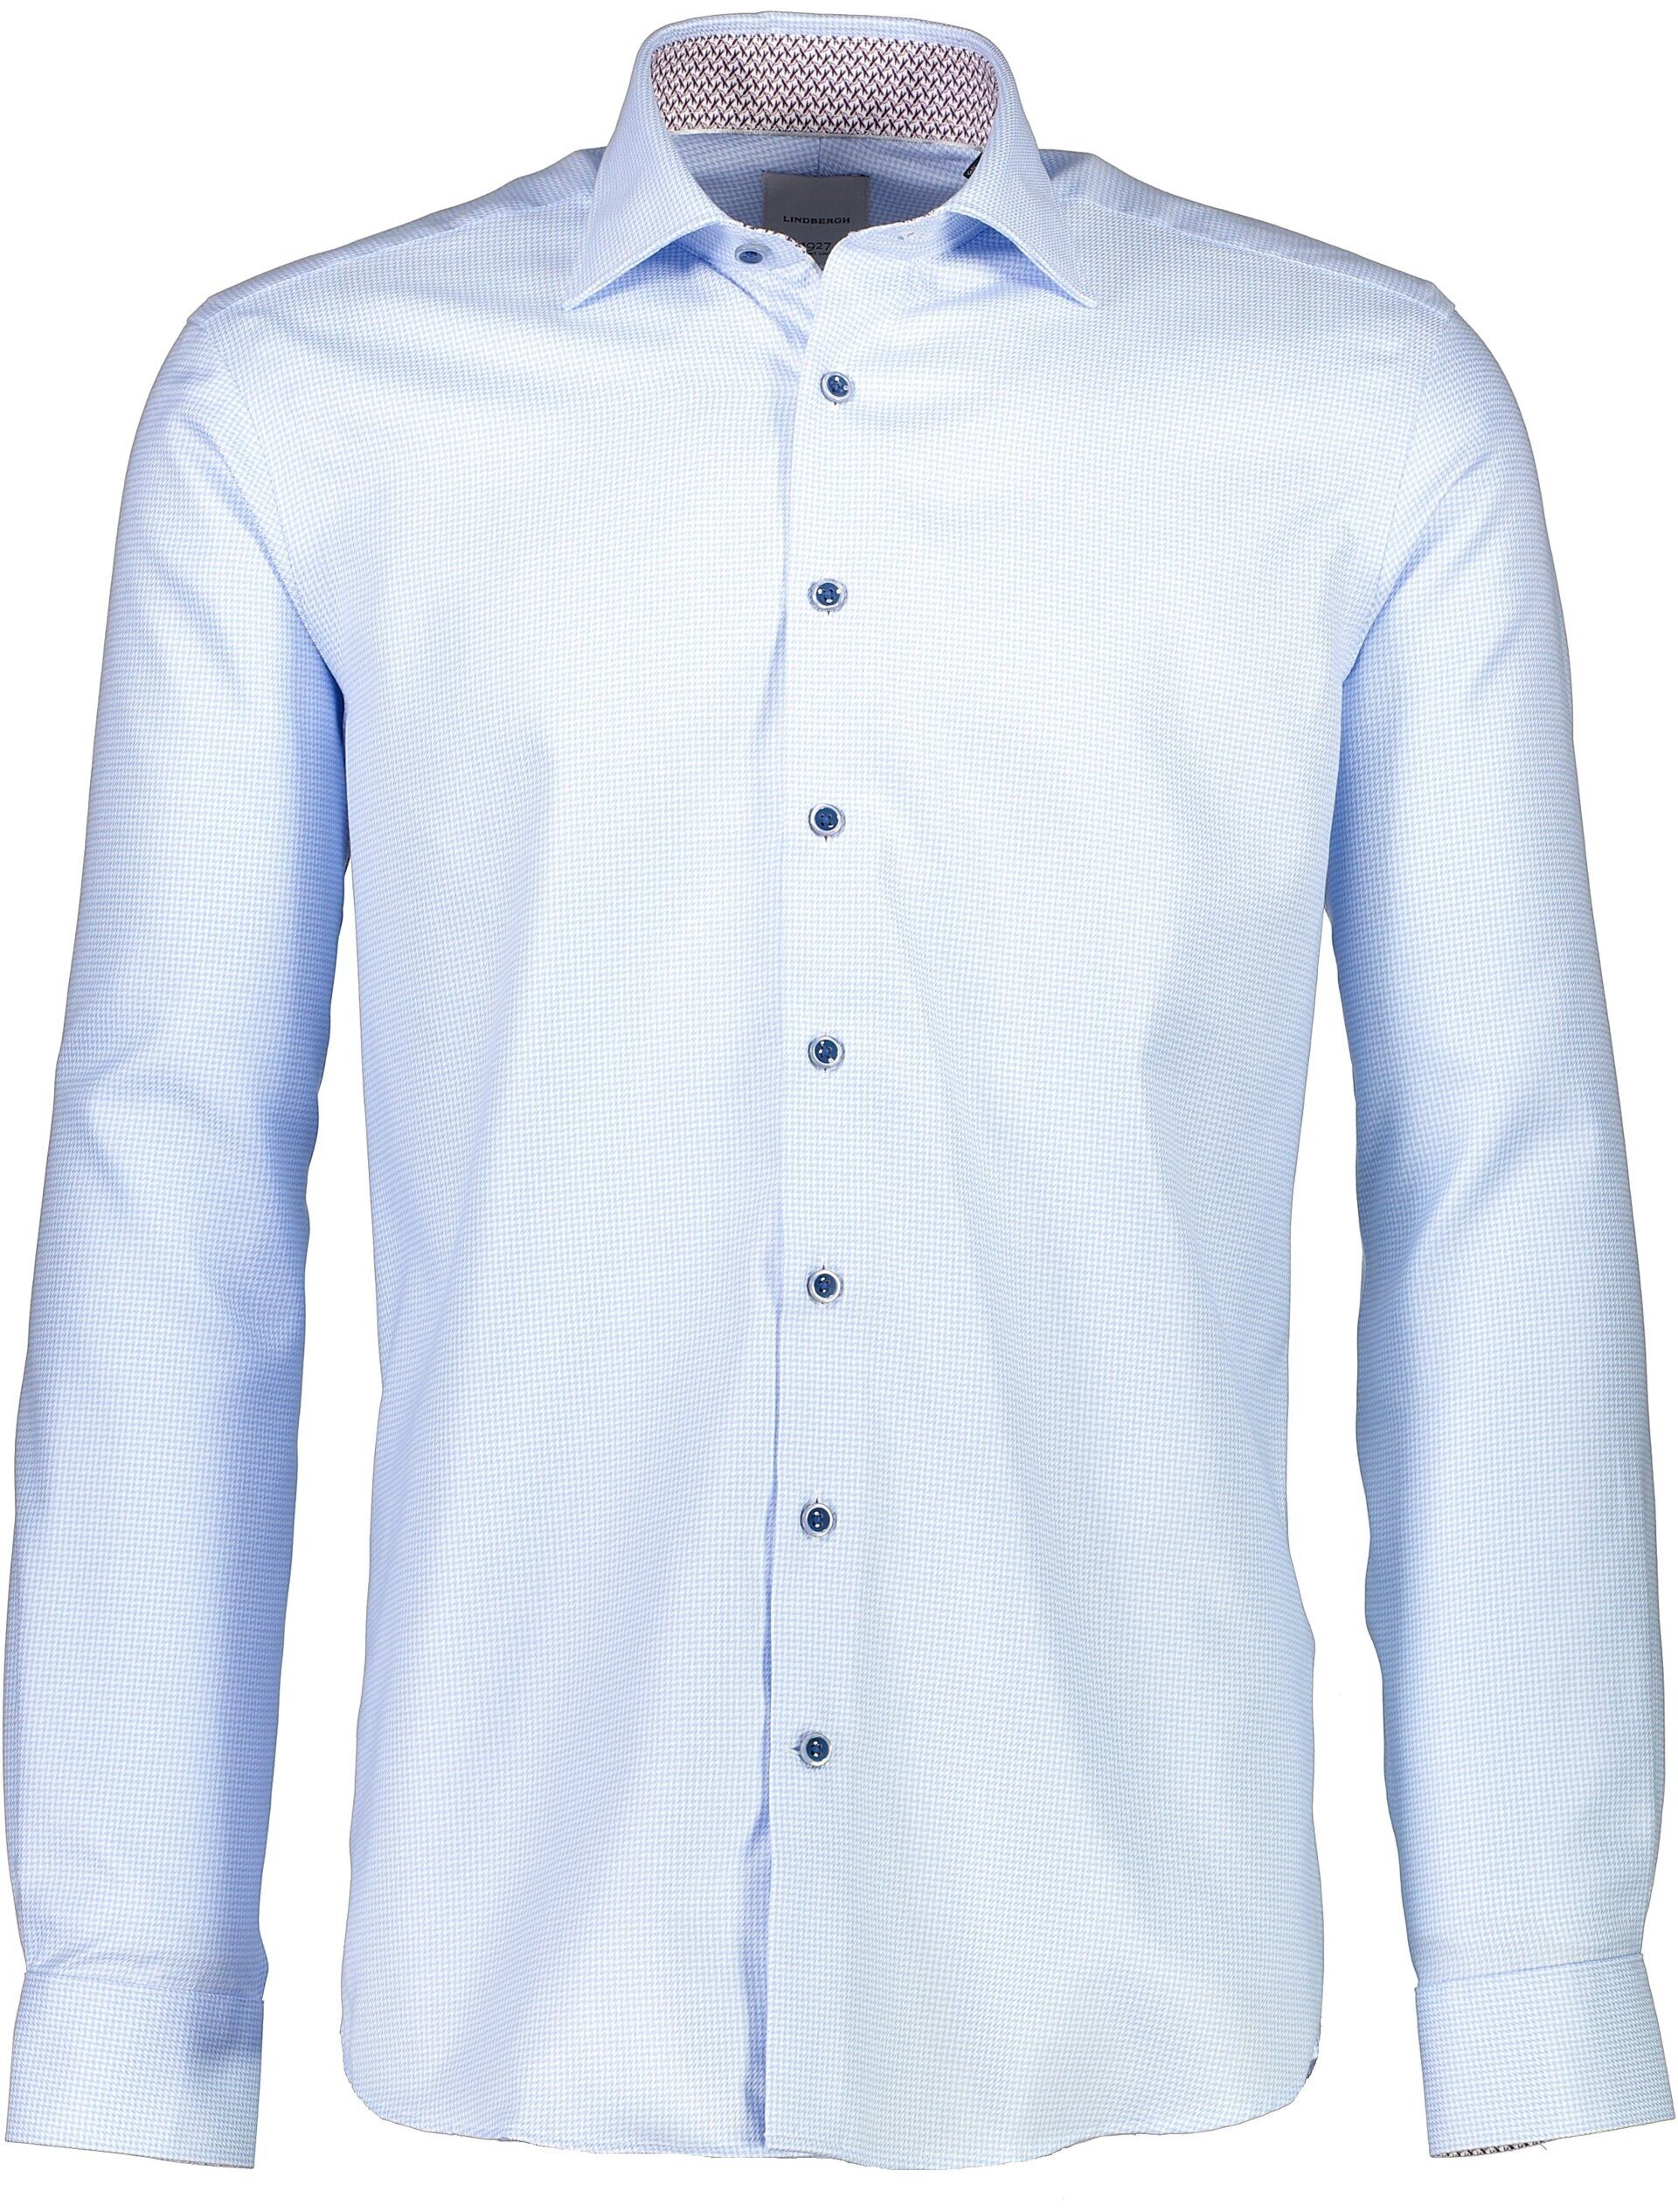 1927 Business casual shirt 30-247236